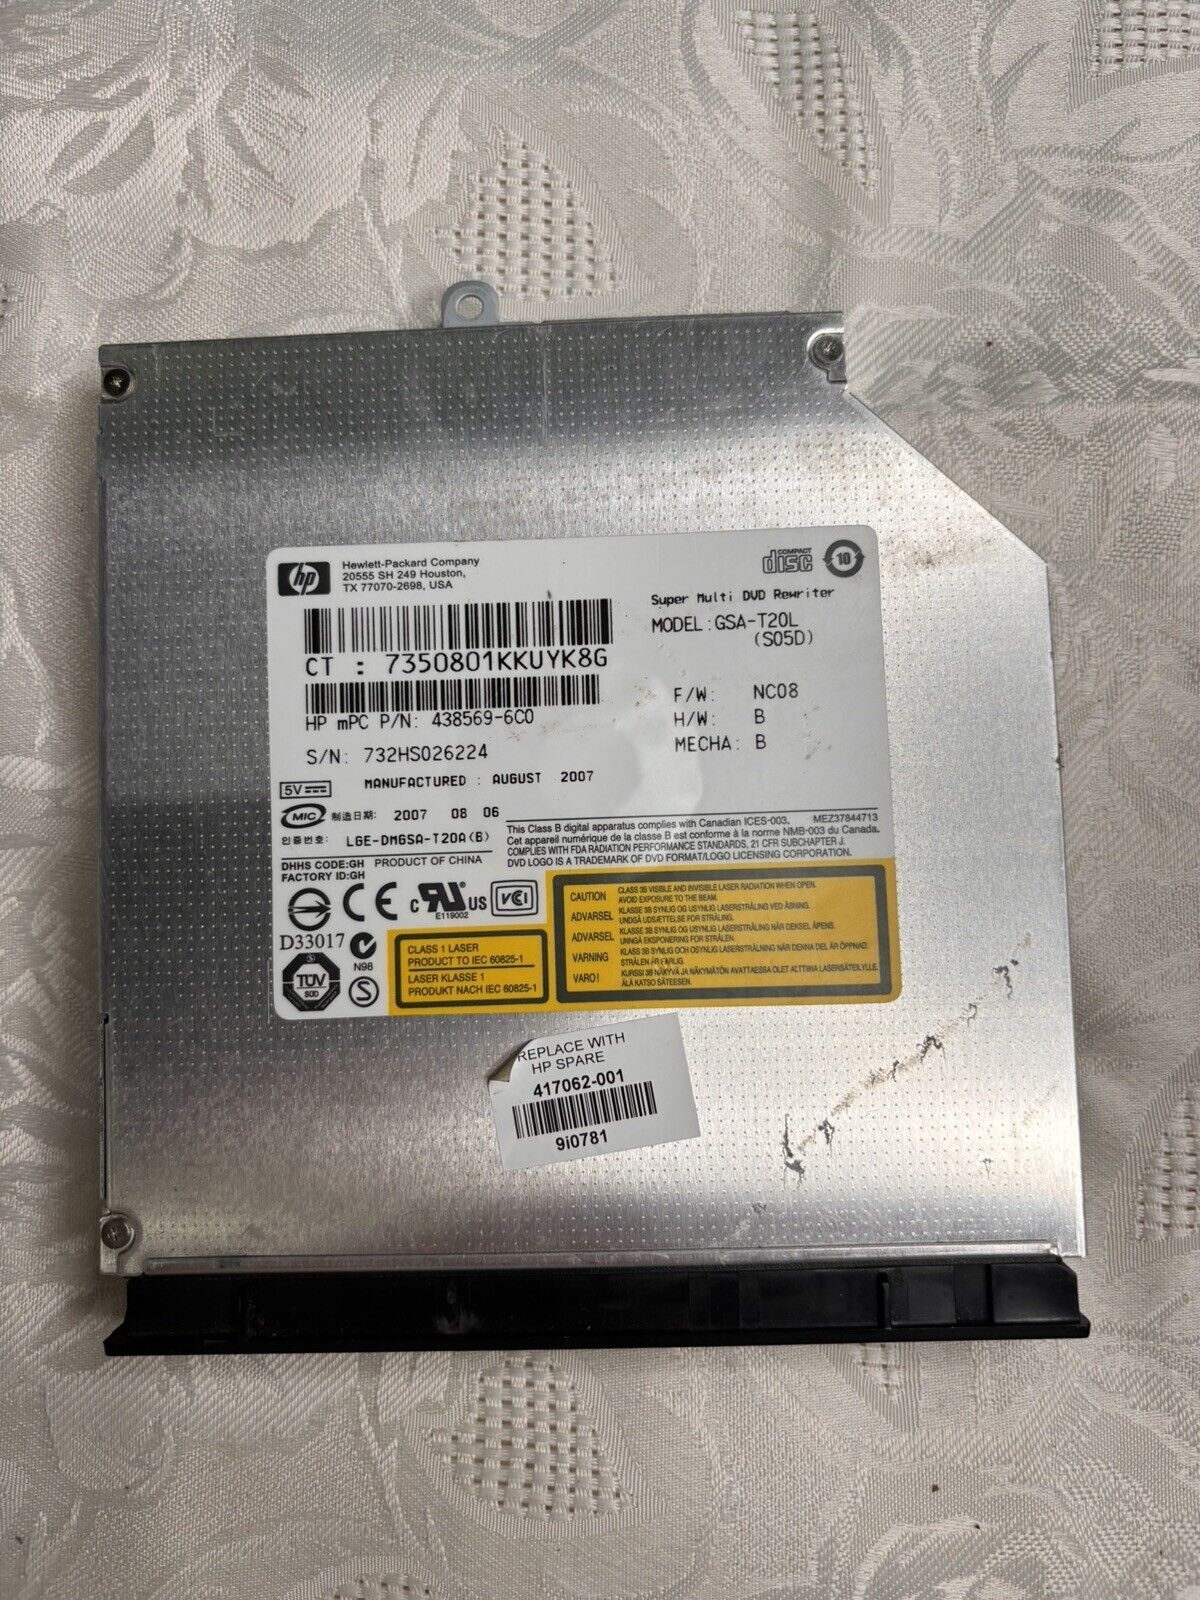 HP 438569-6C0, GSA-T20L -SO5N, IDE, SUPER MULTI DVD-RW